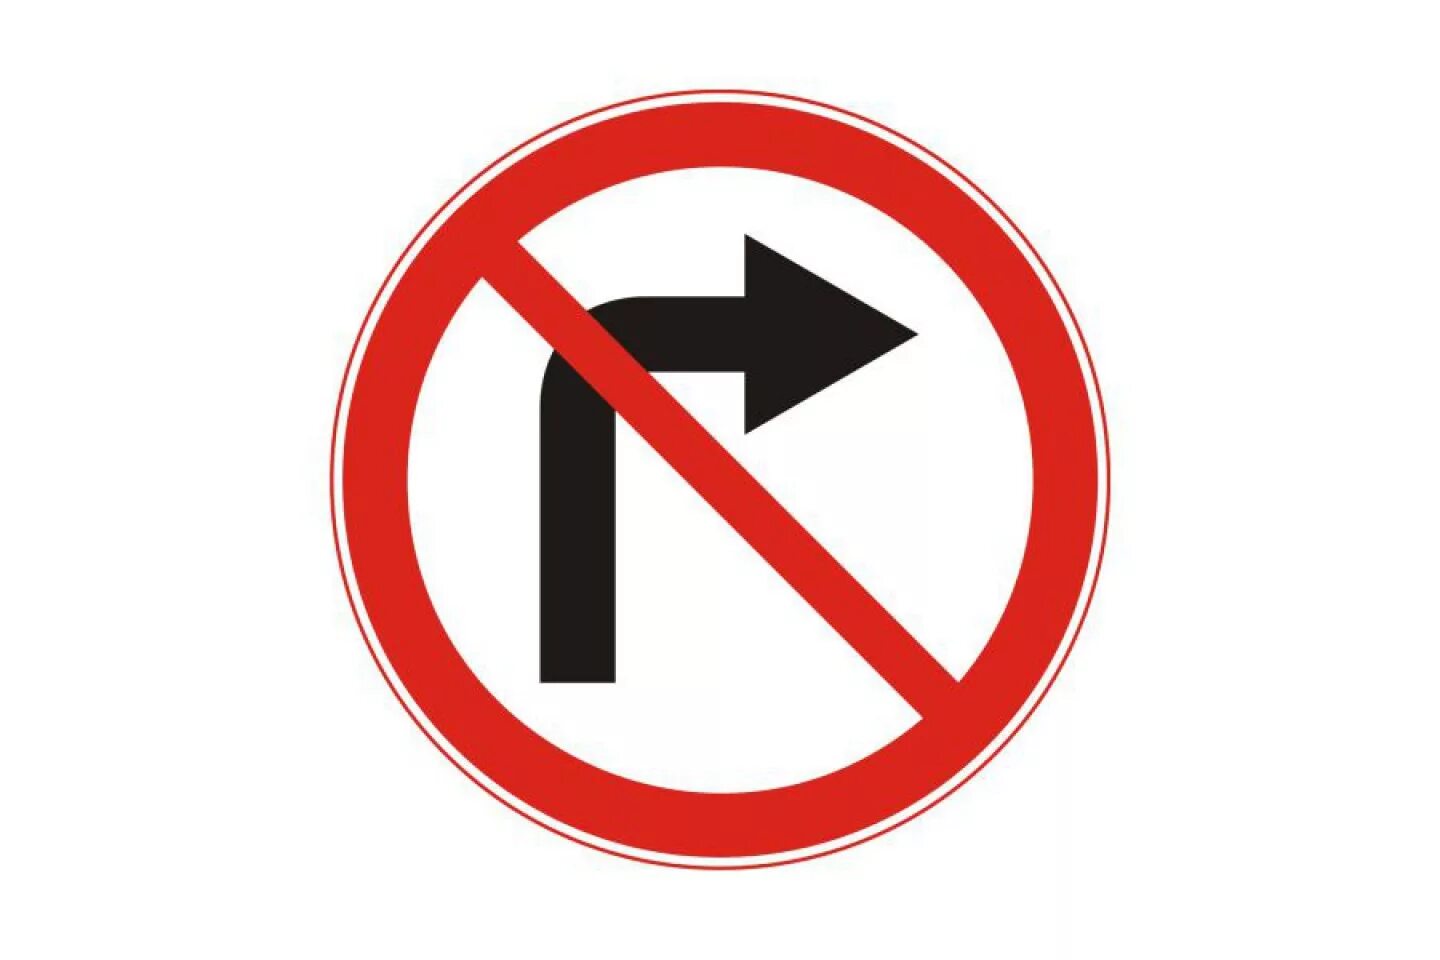 3 18 1 08. Поворот направо запрещен дорожный знак. 3.18.1 Поворот направо запрещен. Знак 3.18.1. Знак 3.18.2 поворот налево запрещен.